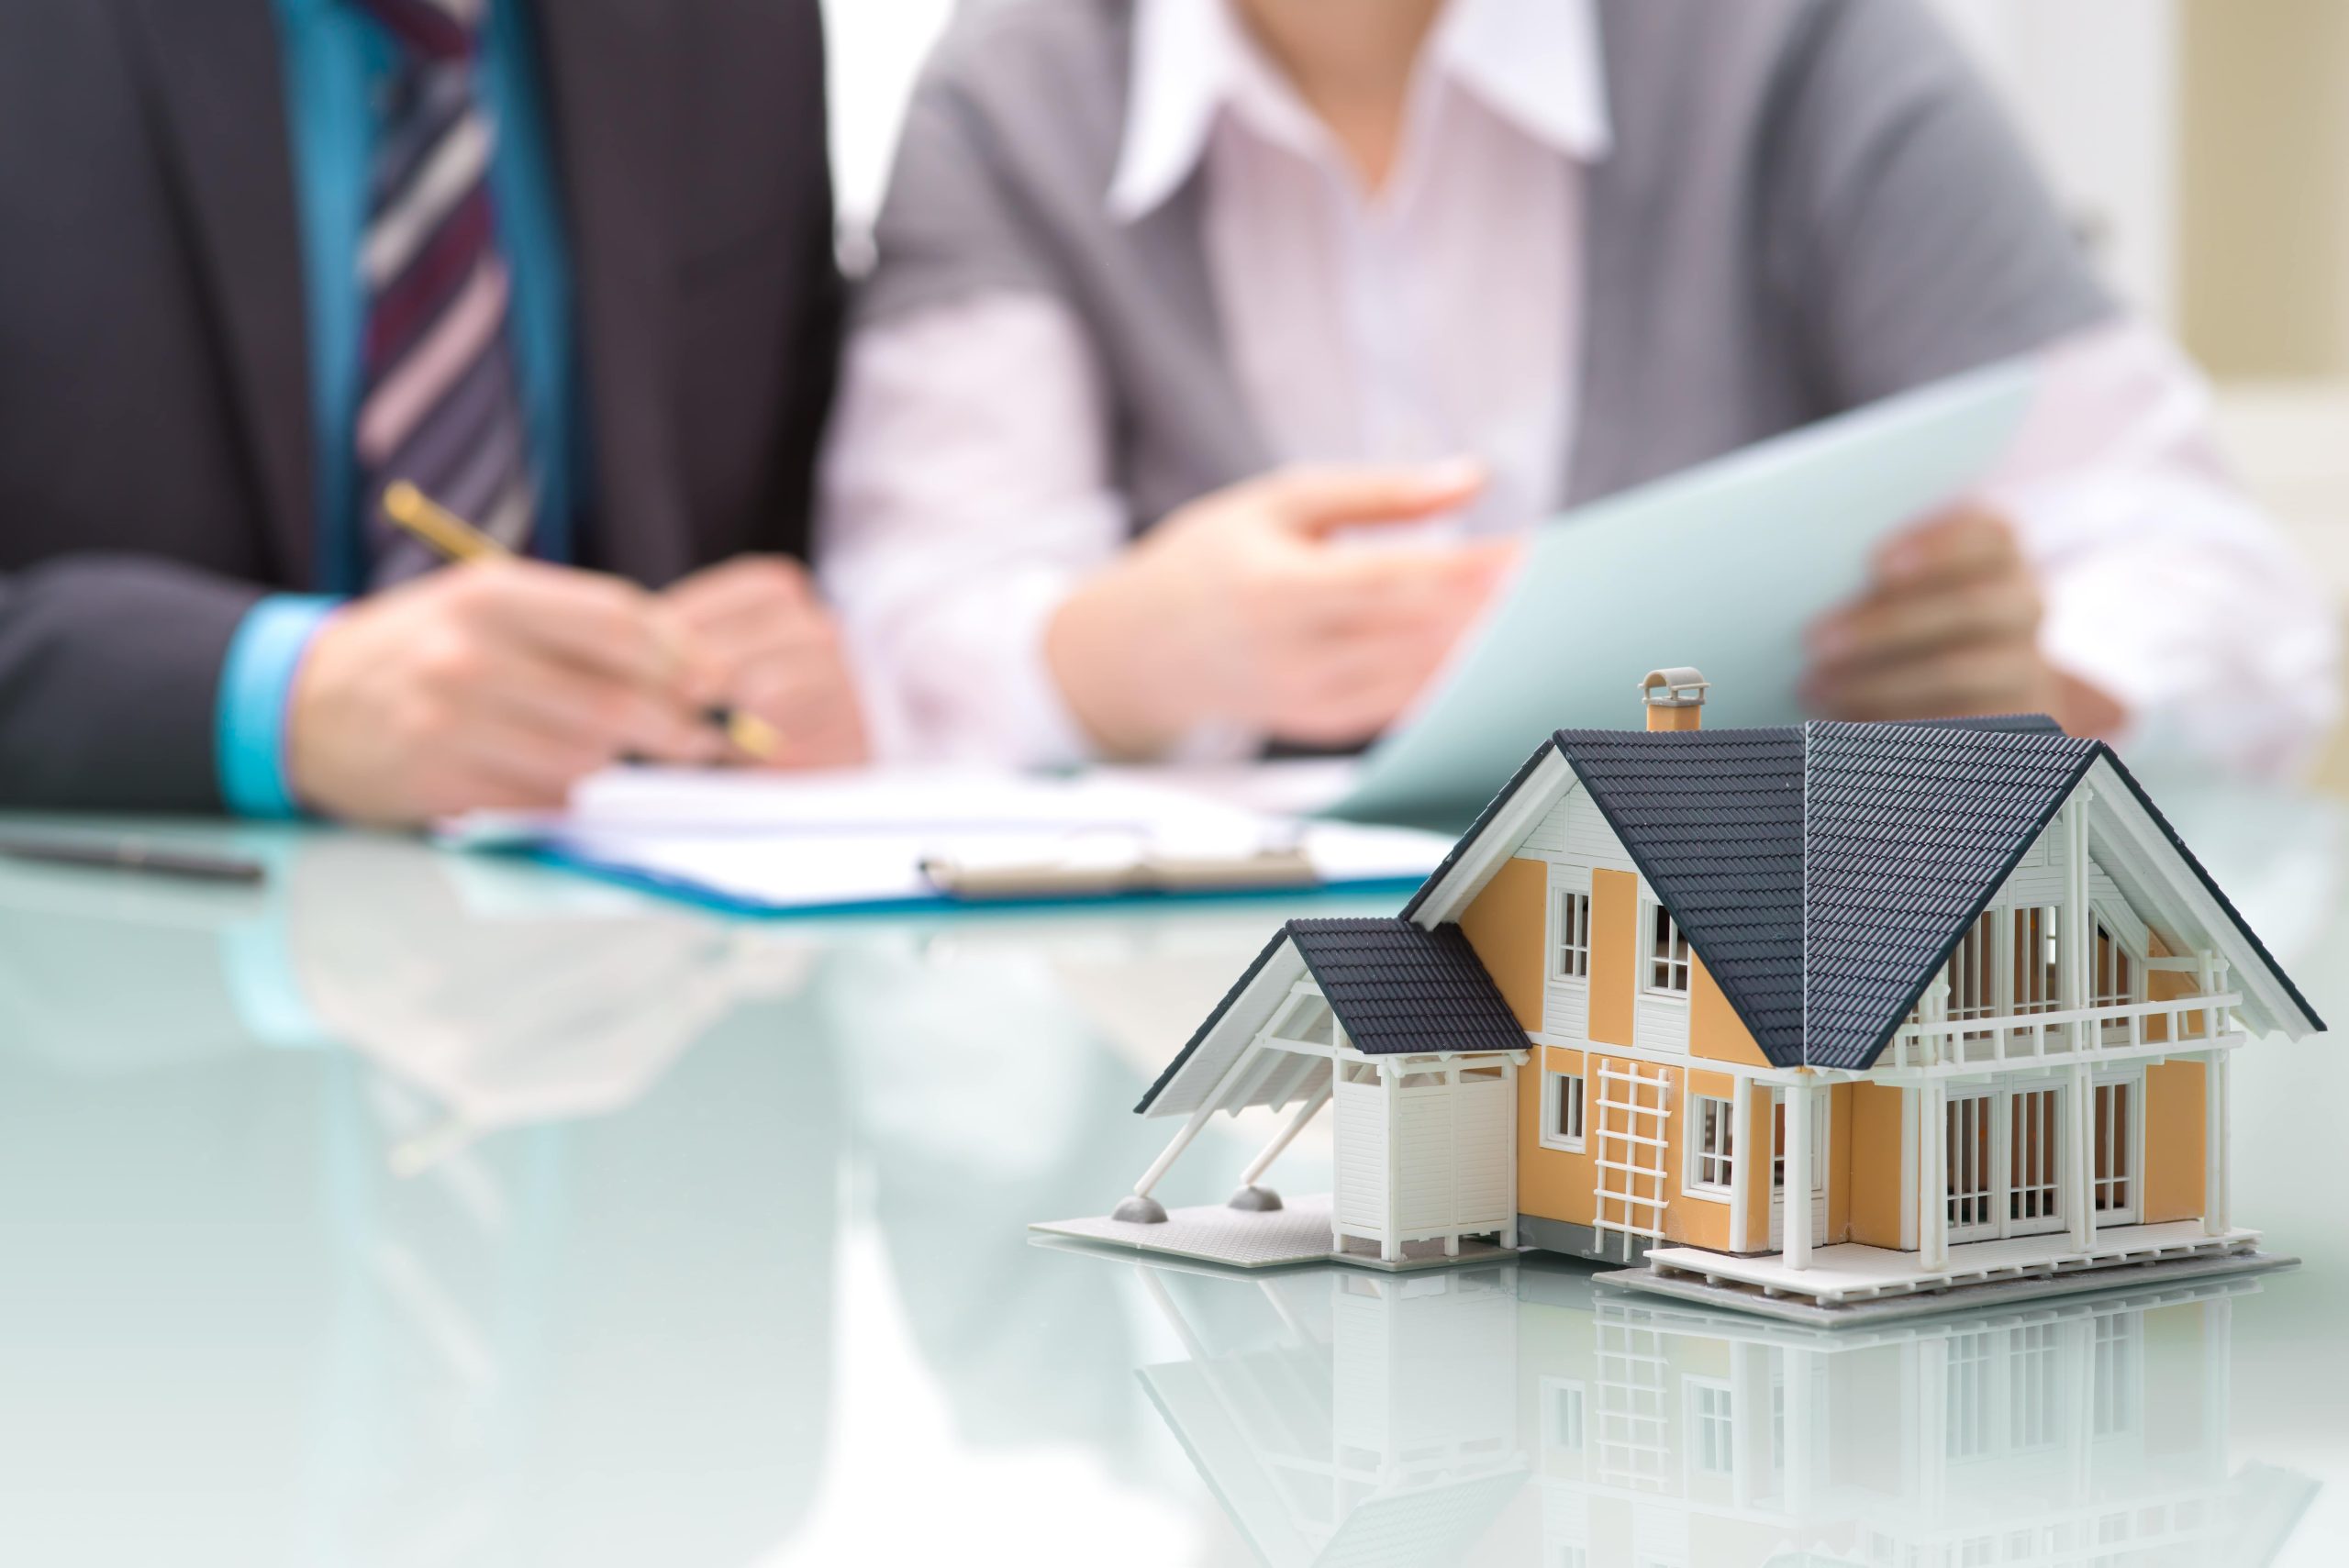 House model in focus, in background lenders reviewing paperwork